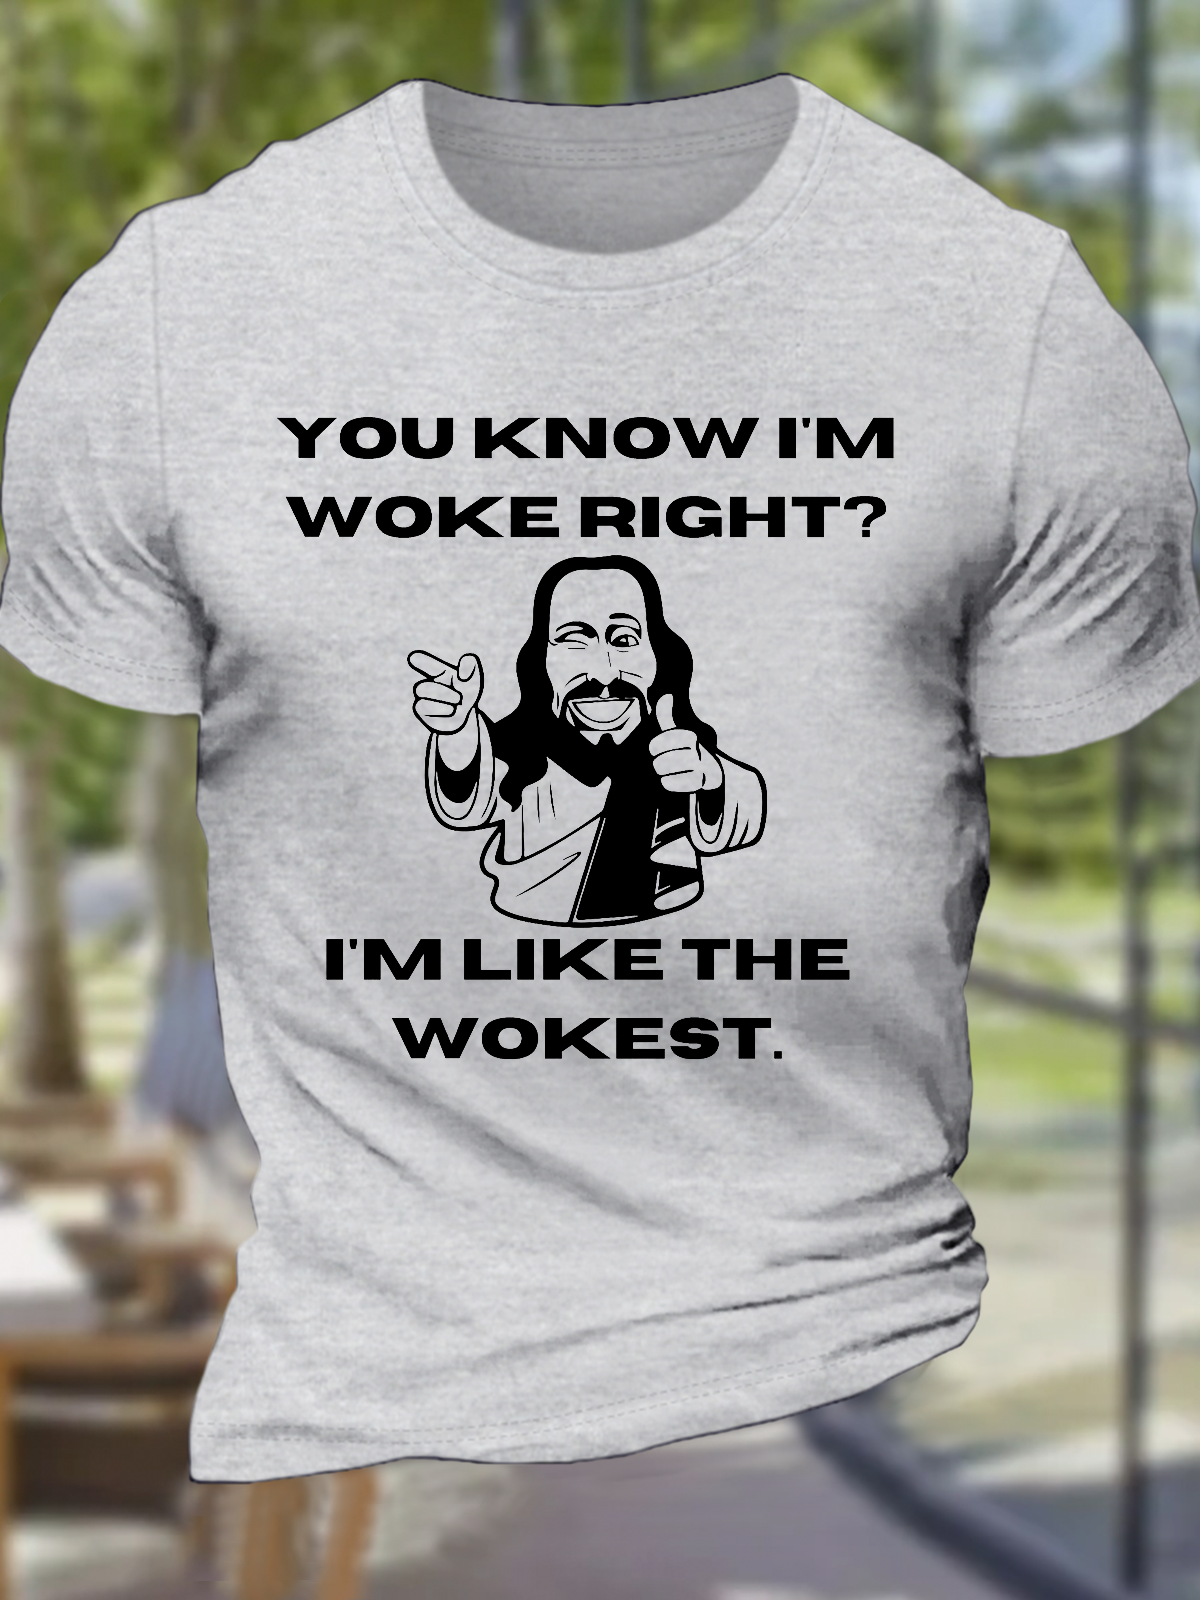 Women's Funny You Know I'M Woke Jesus Was Woke The Wokest Cotton Text Letters Casual T-Shirt